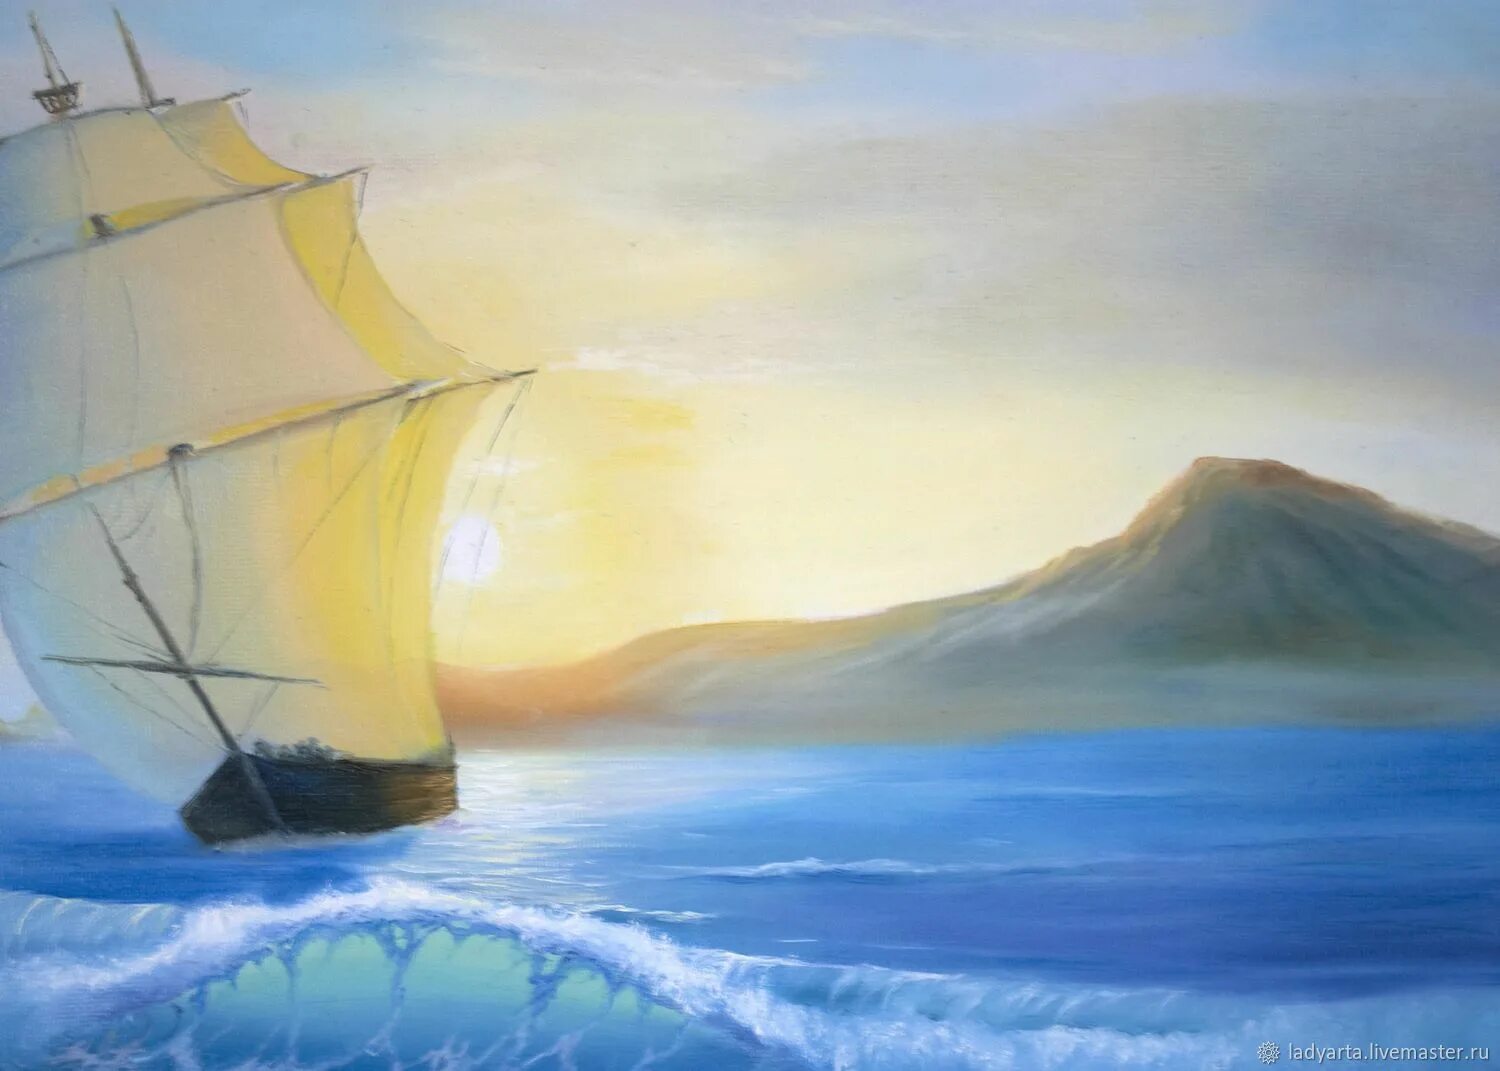 Кораблик волна. Кораблик картина. Картина ветер по морю гуляет. Кораблик на ветру. По волнам ветер в паруса